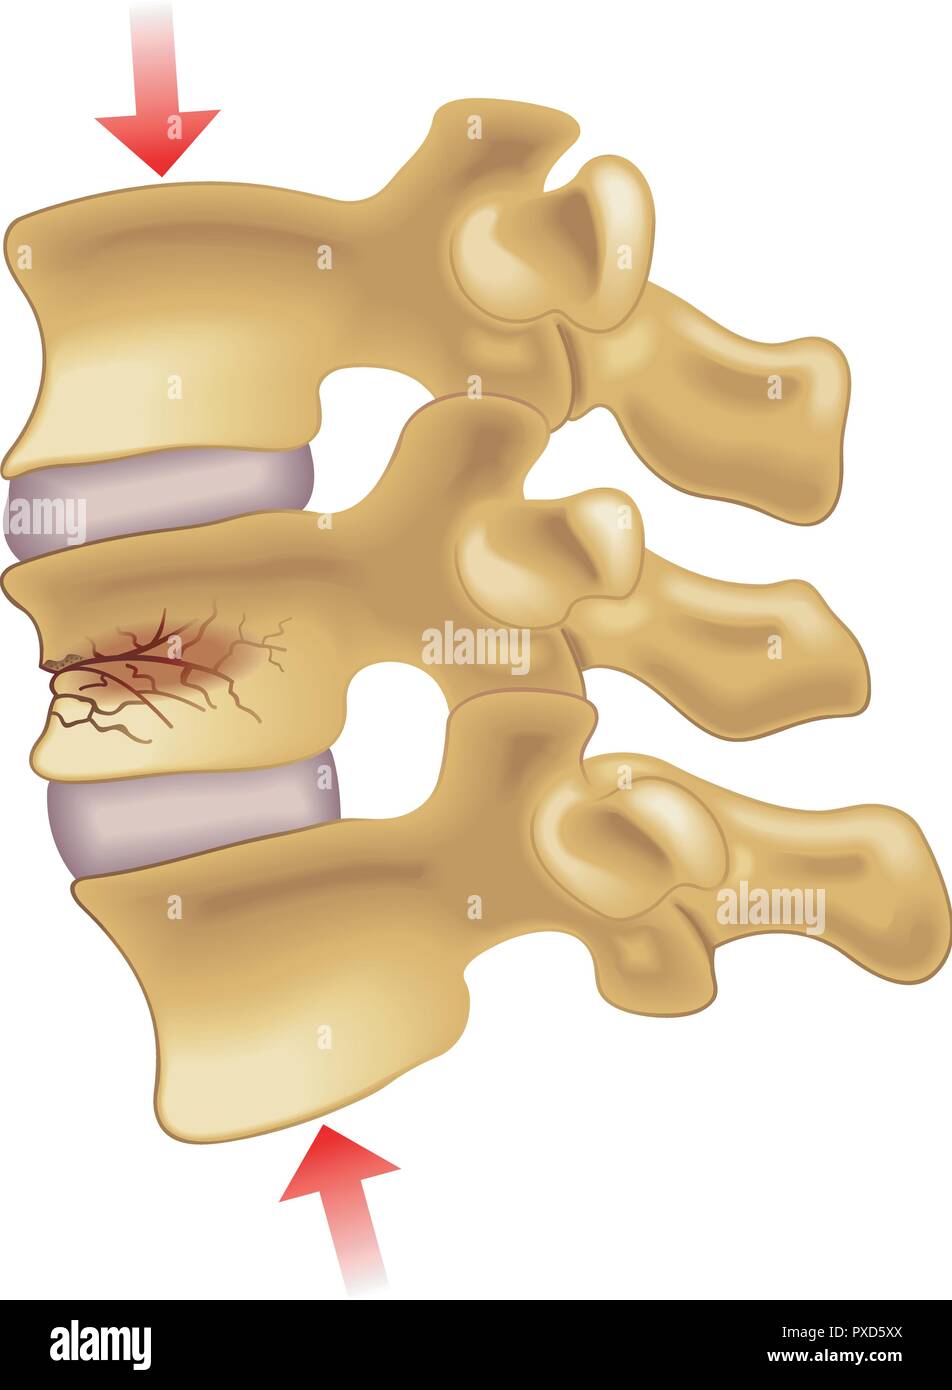 vector medical illustration of the symptoms of vertebral compression fracture Stock Vector